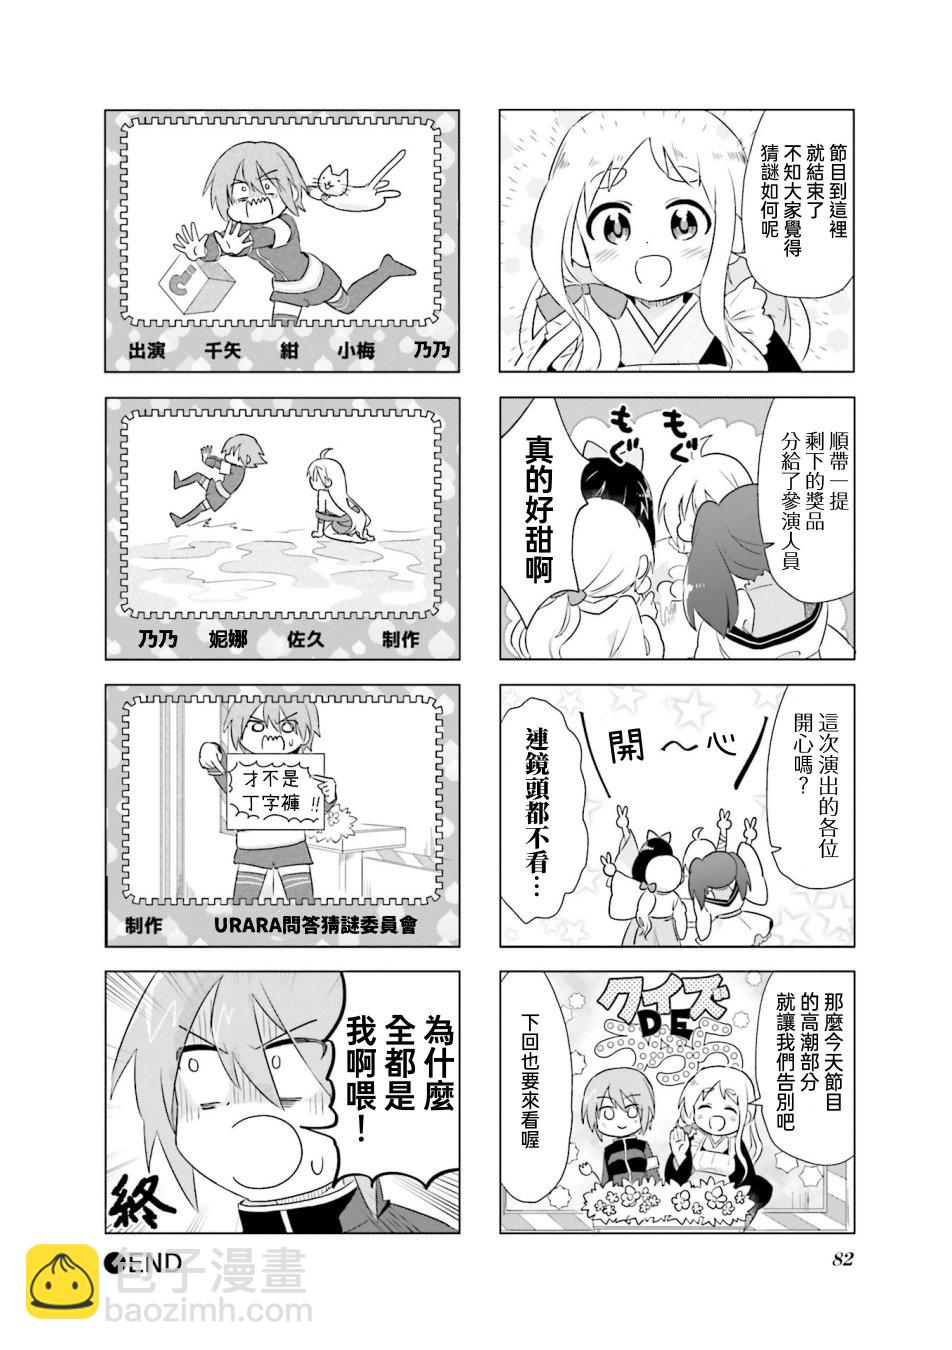 Urara迷路帖 漫畫選集 - 第9話 - 2